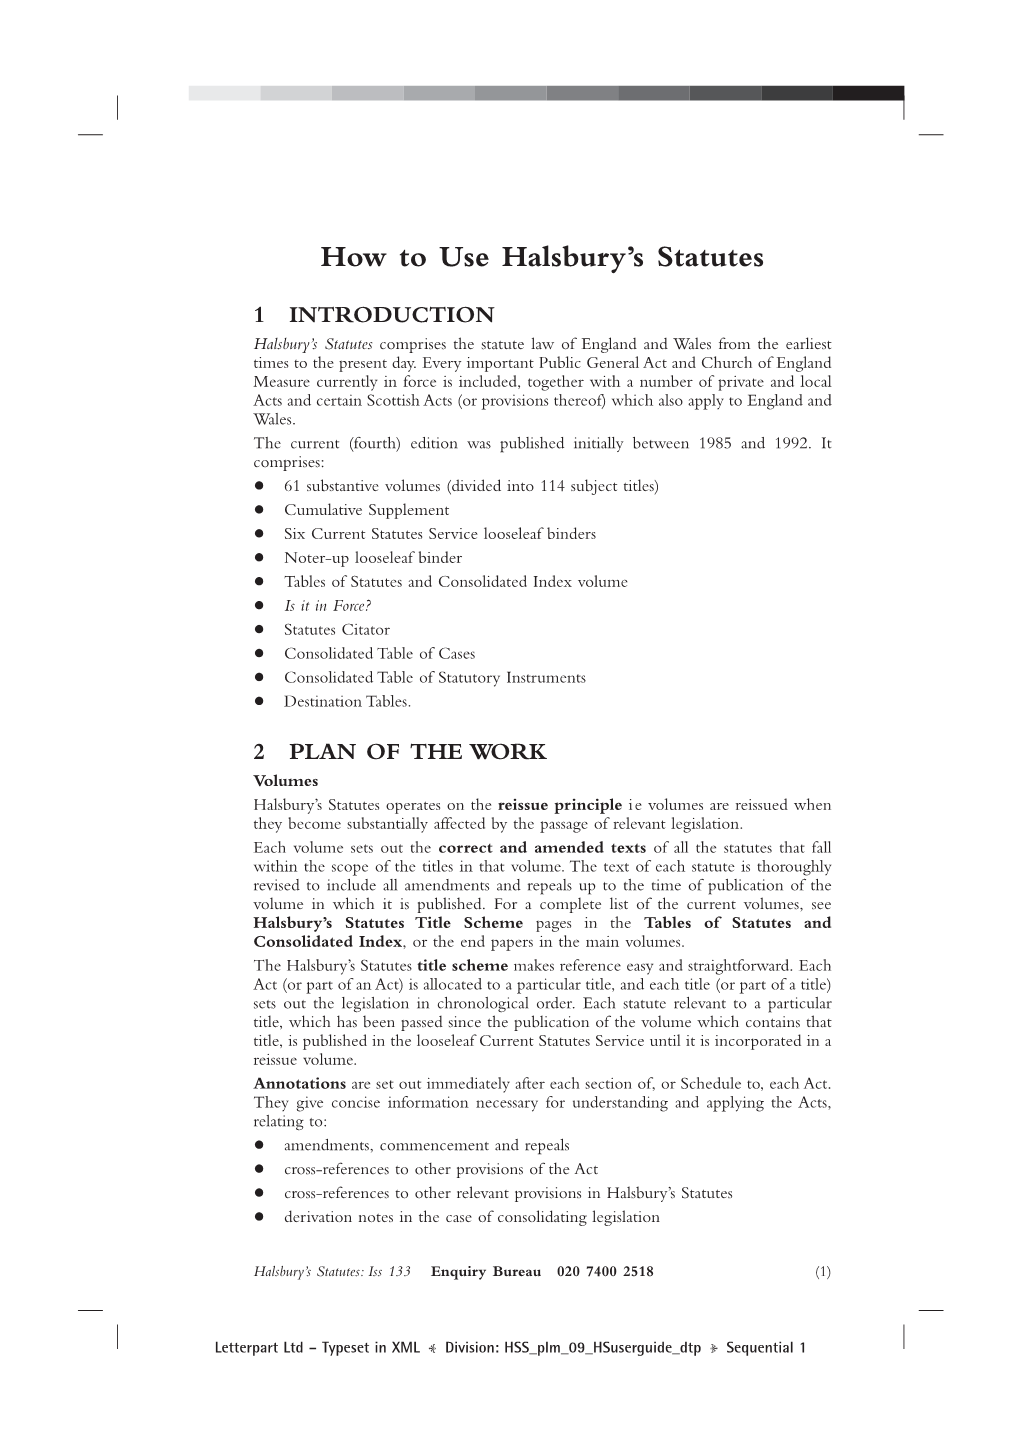 How to Use Halsbury's Statutes